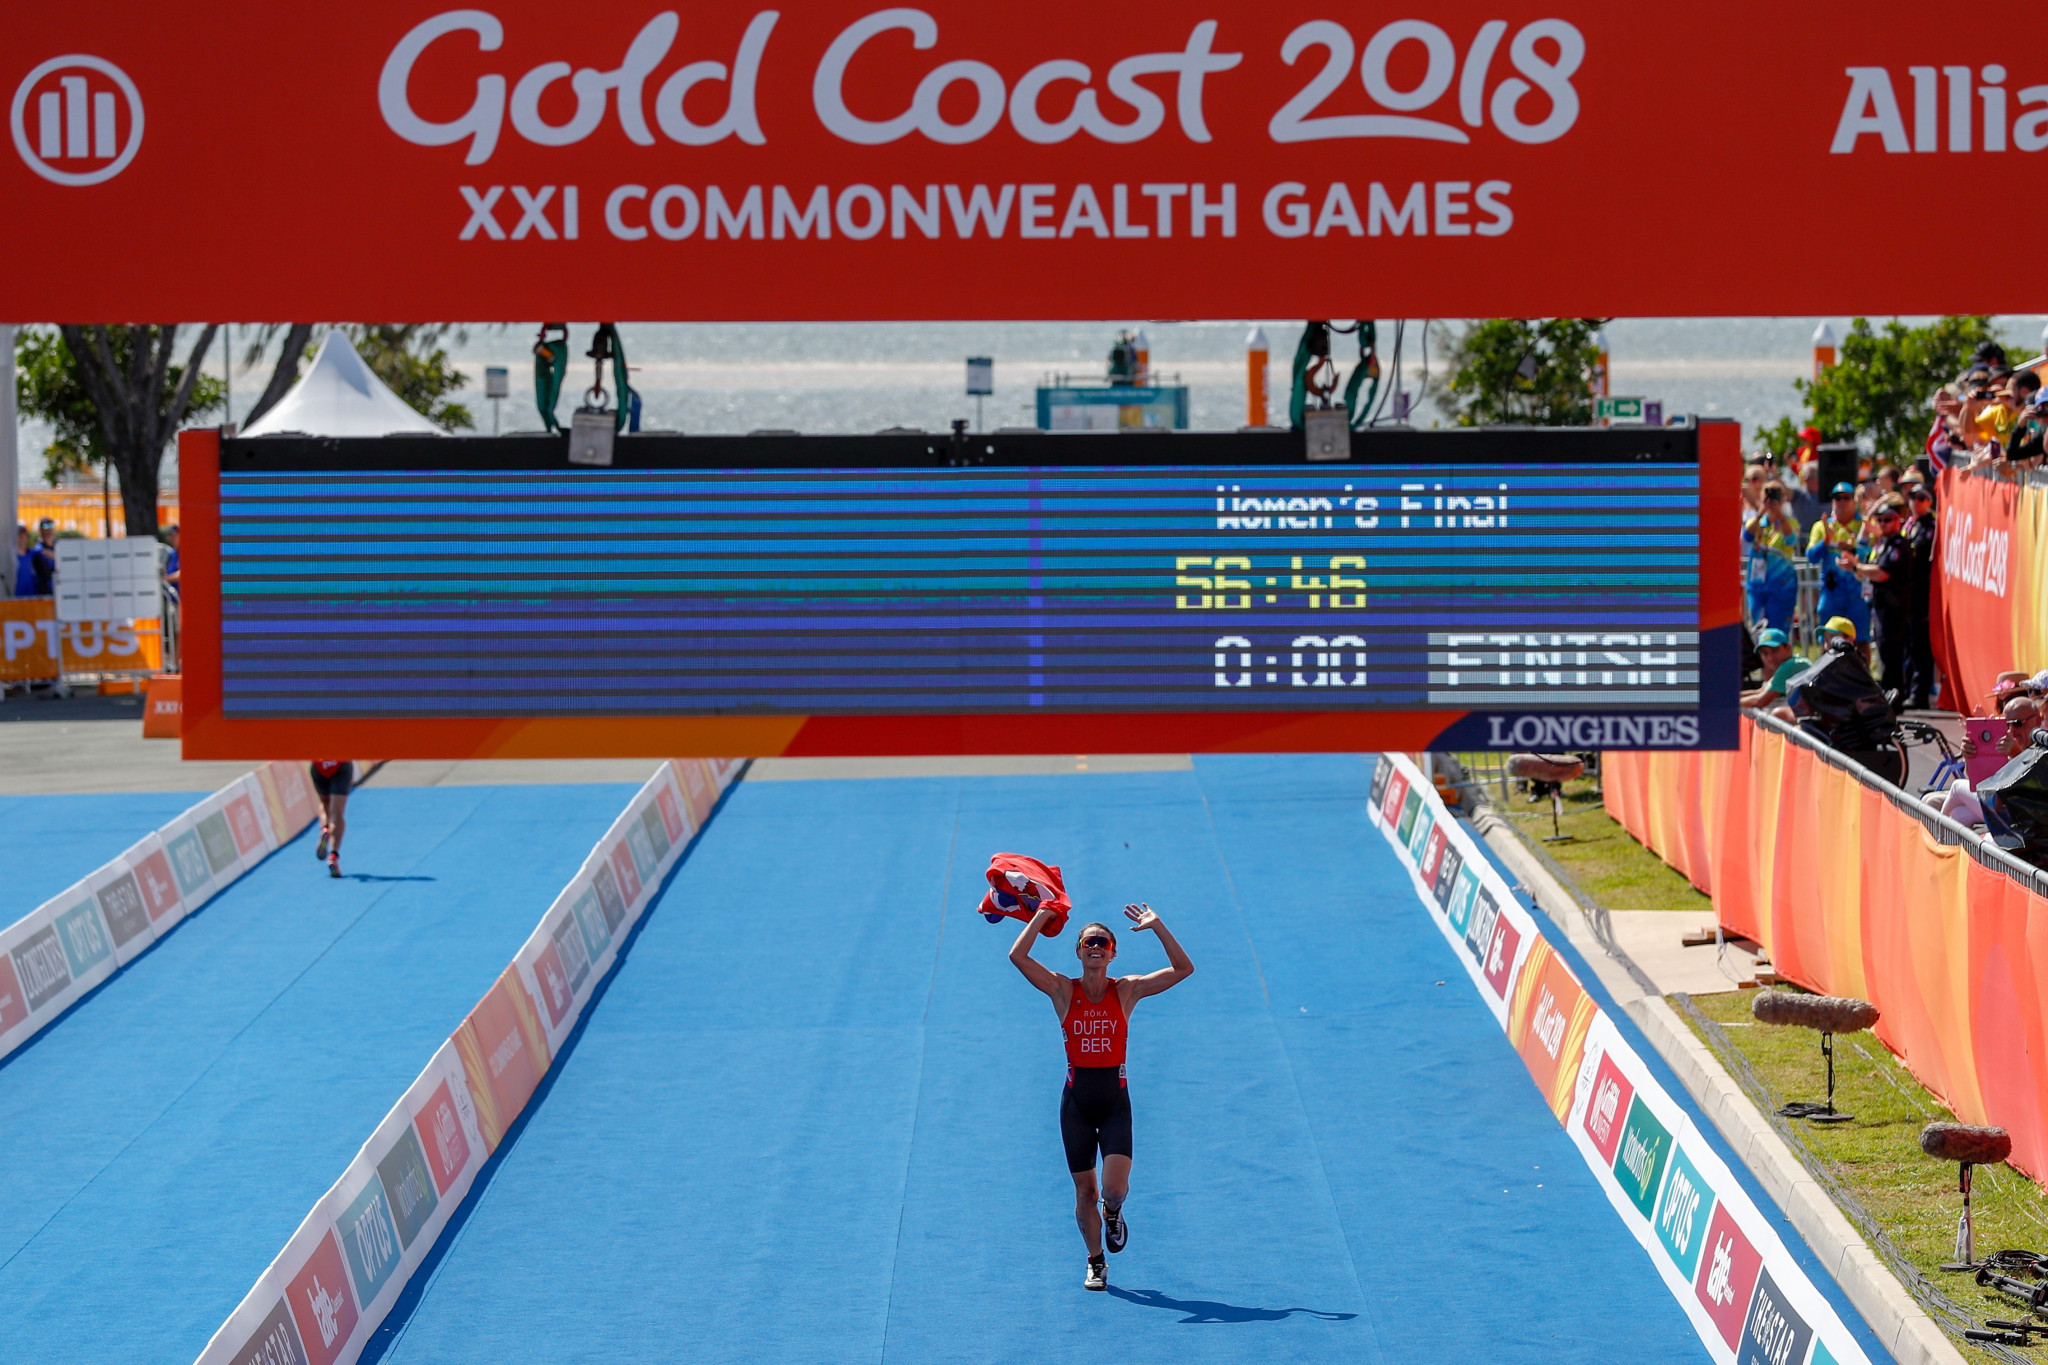 Bermudan triathlete Duffy wins first gold medal of Gold Coast 2018